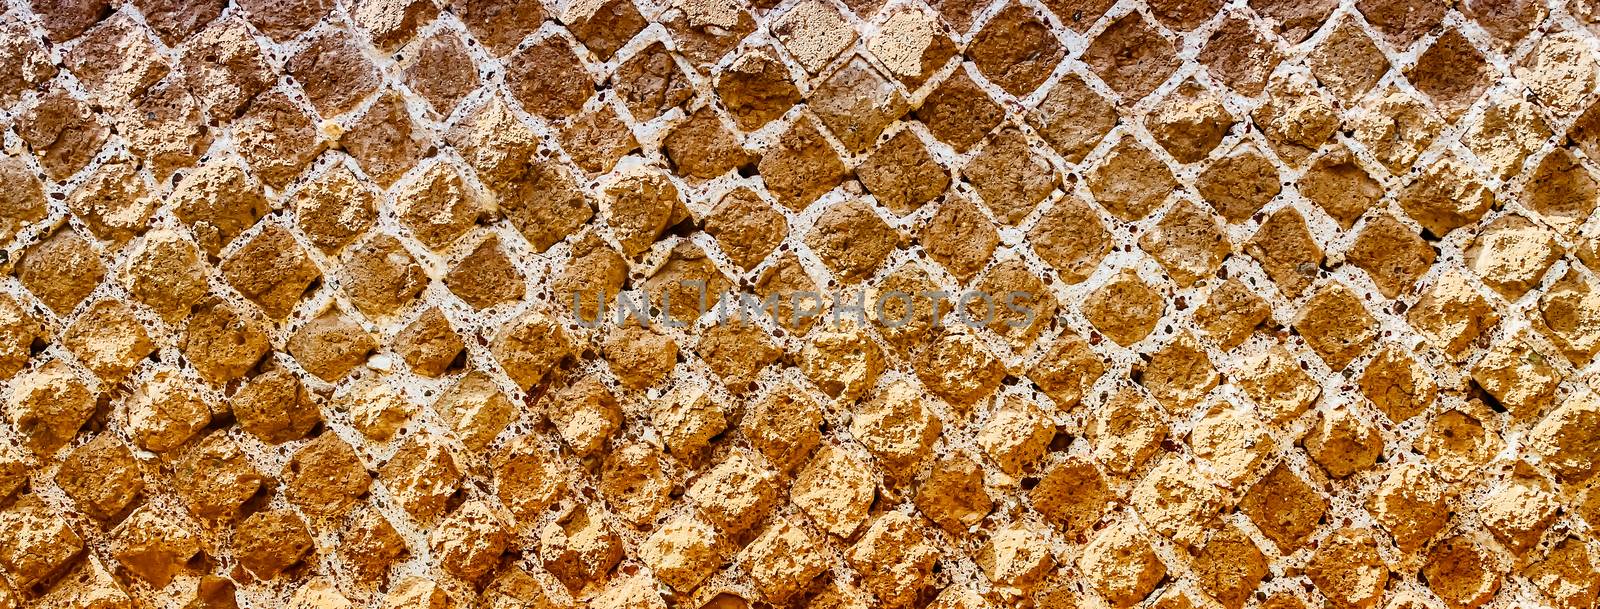 Red Stone Brick Wall Texture, may use as background by marcorubino